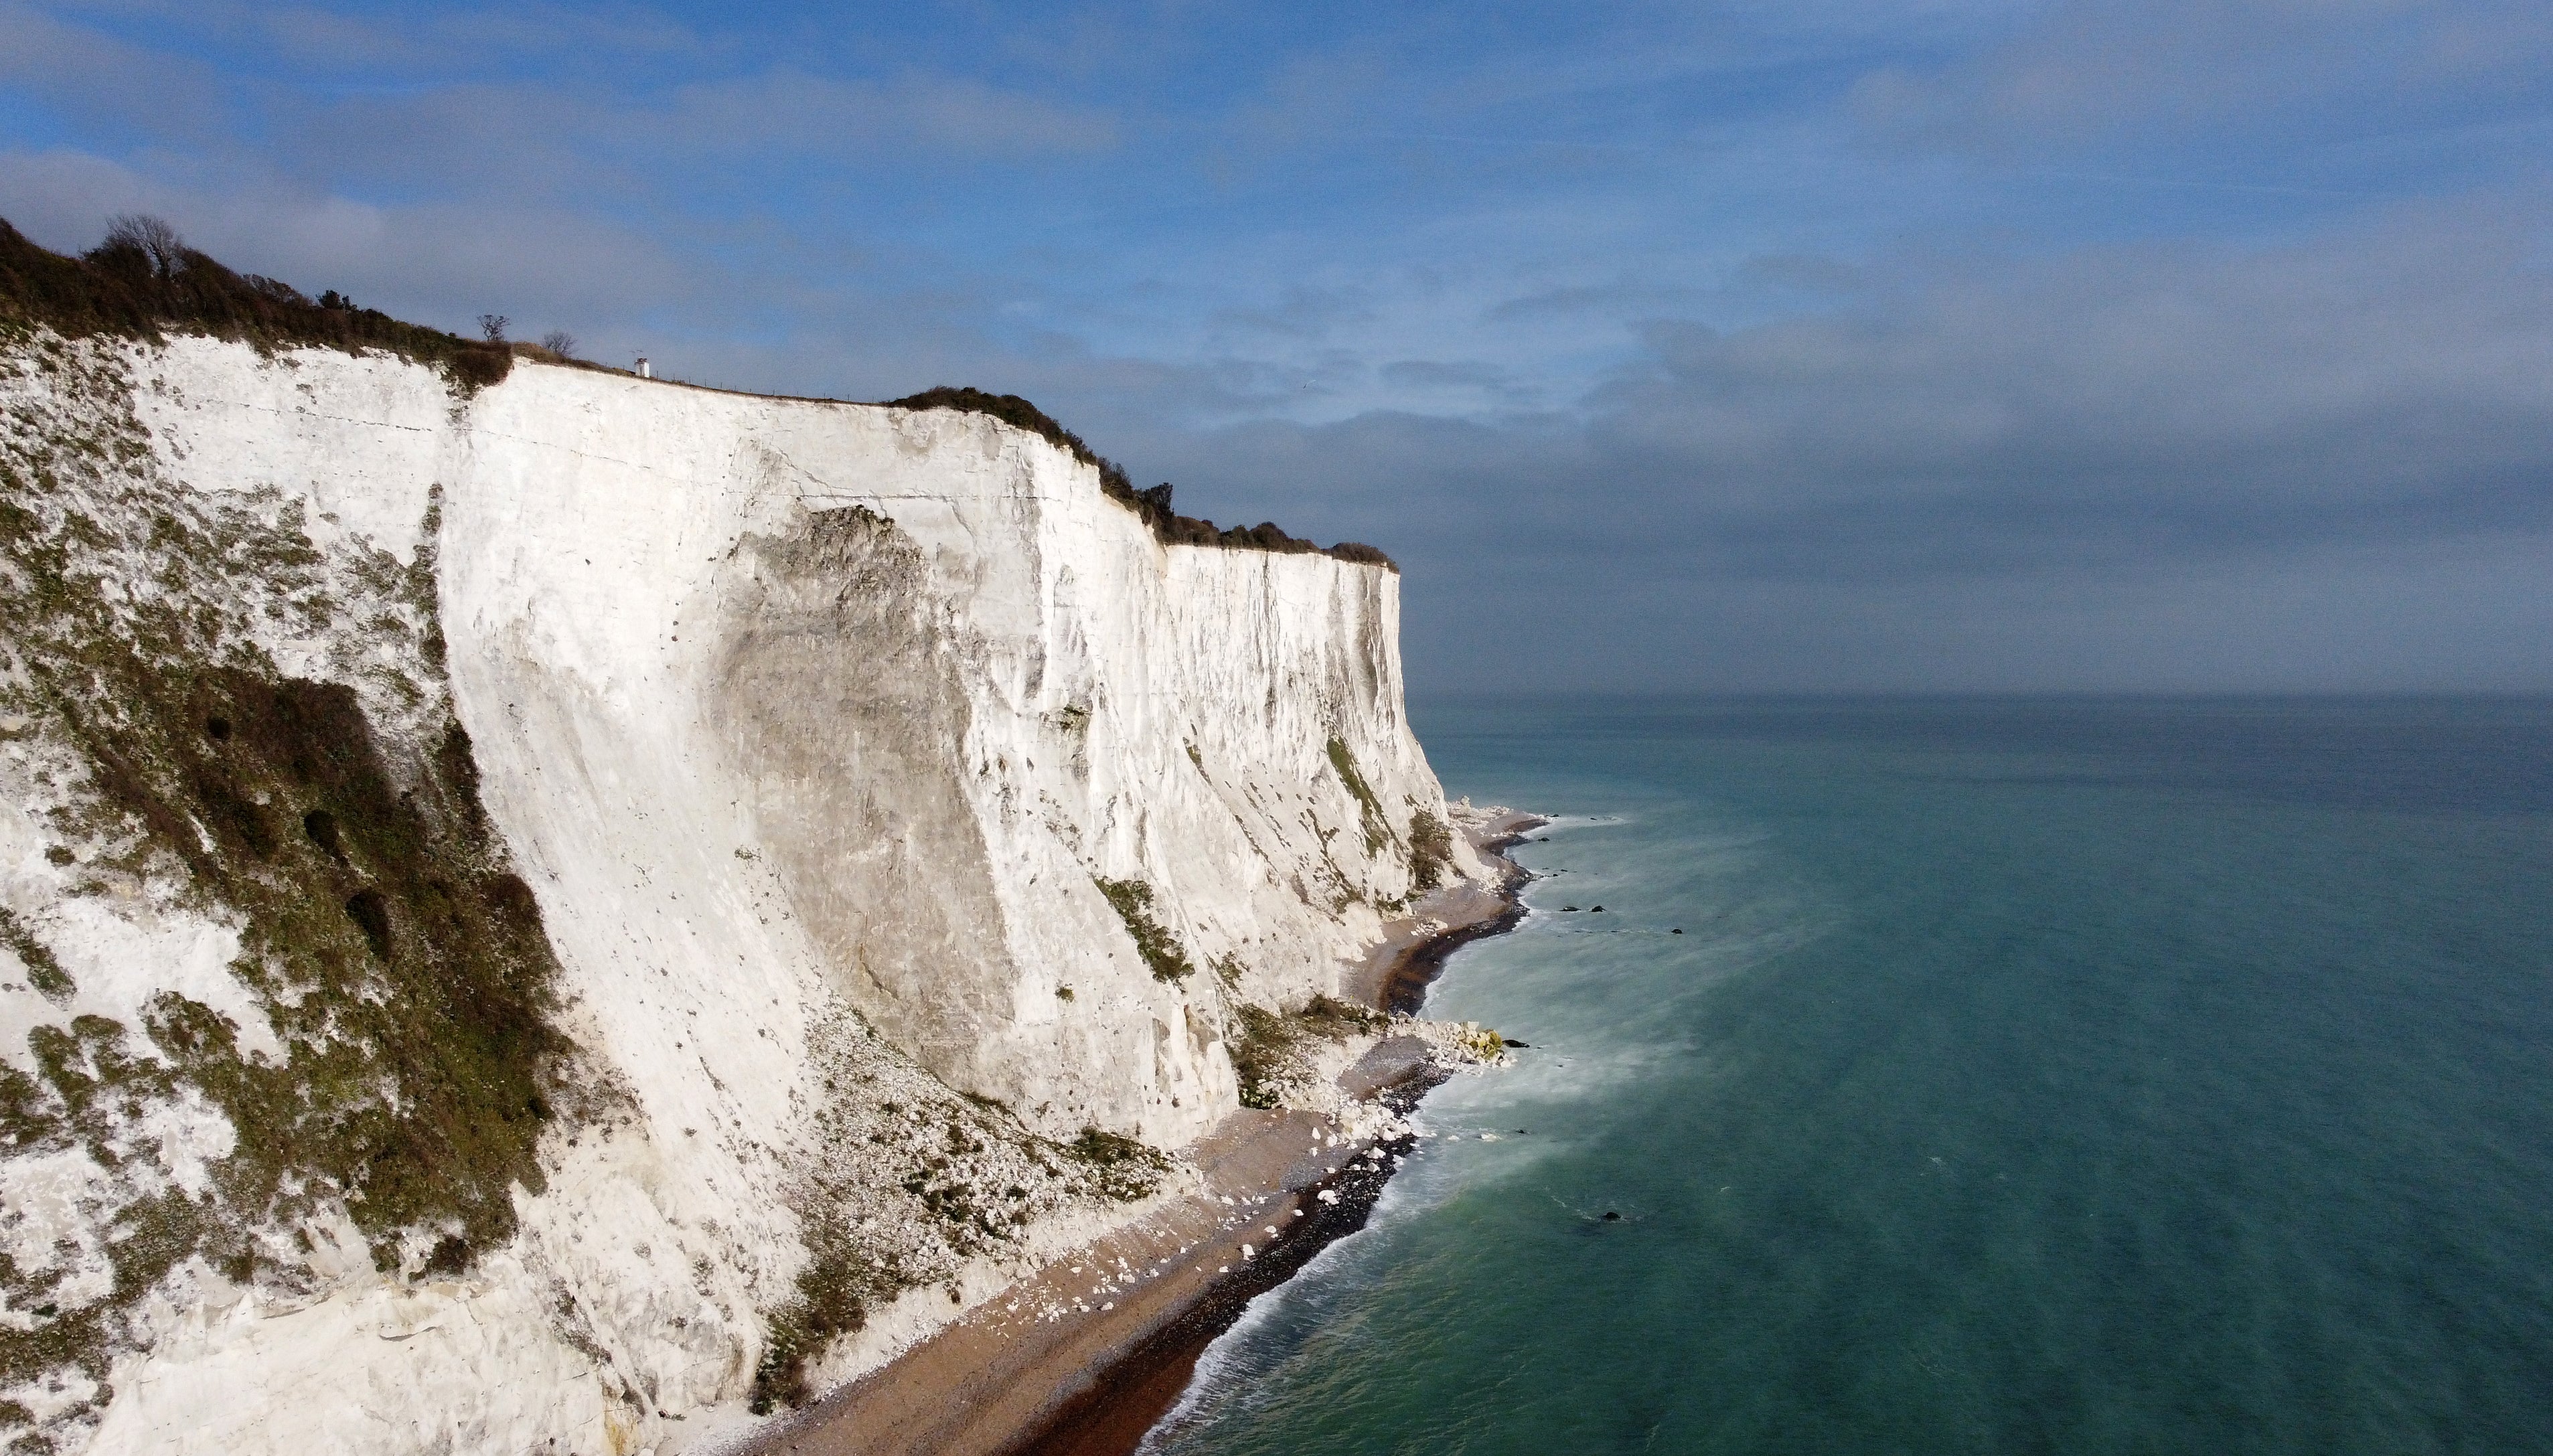 The White Cliffs of Dover in Kent (Gareth Fuller/PA)